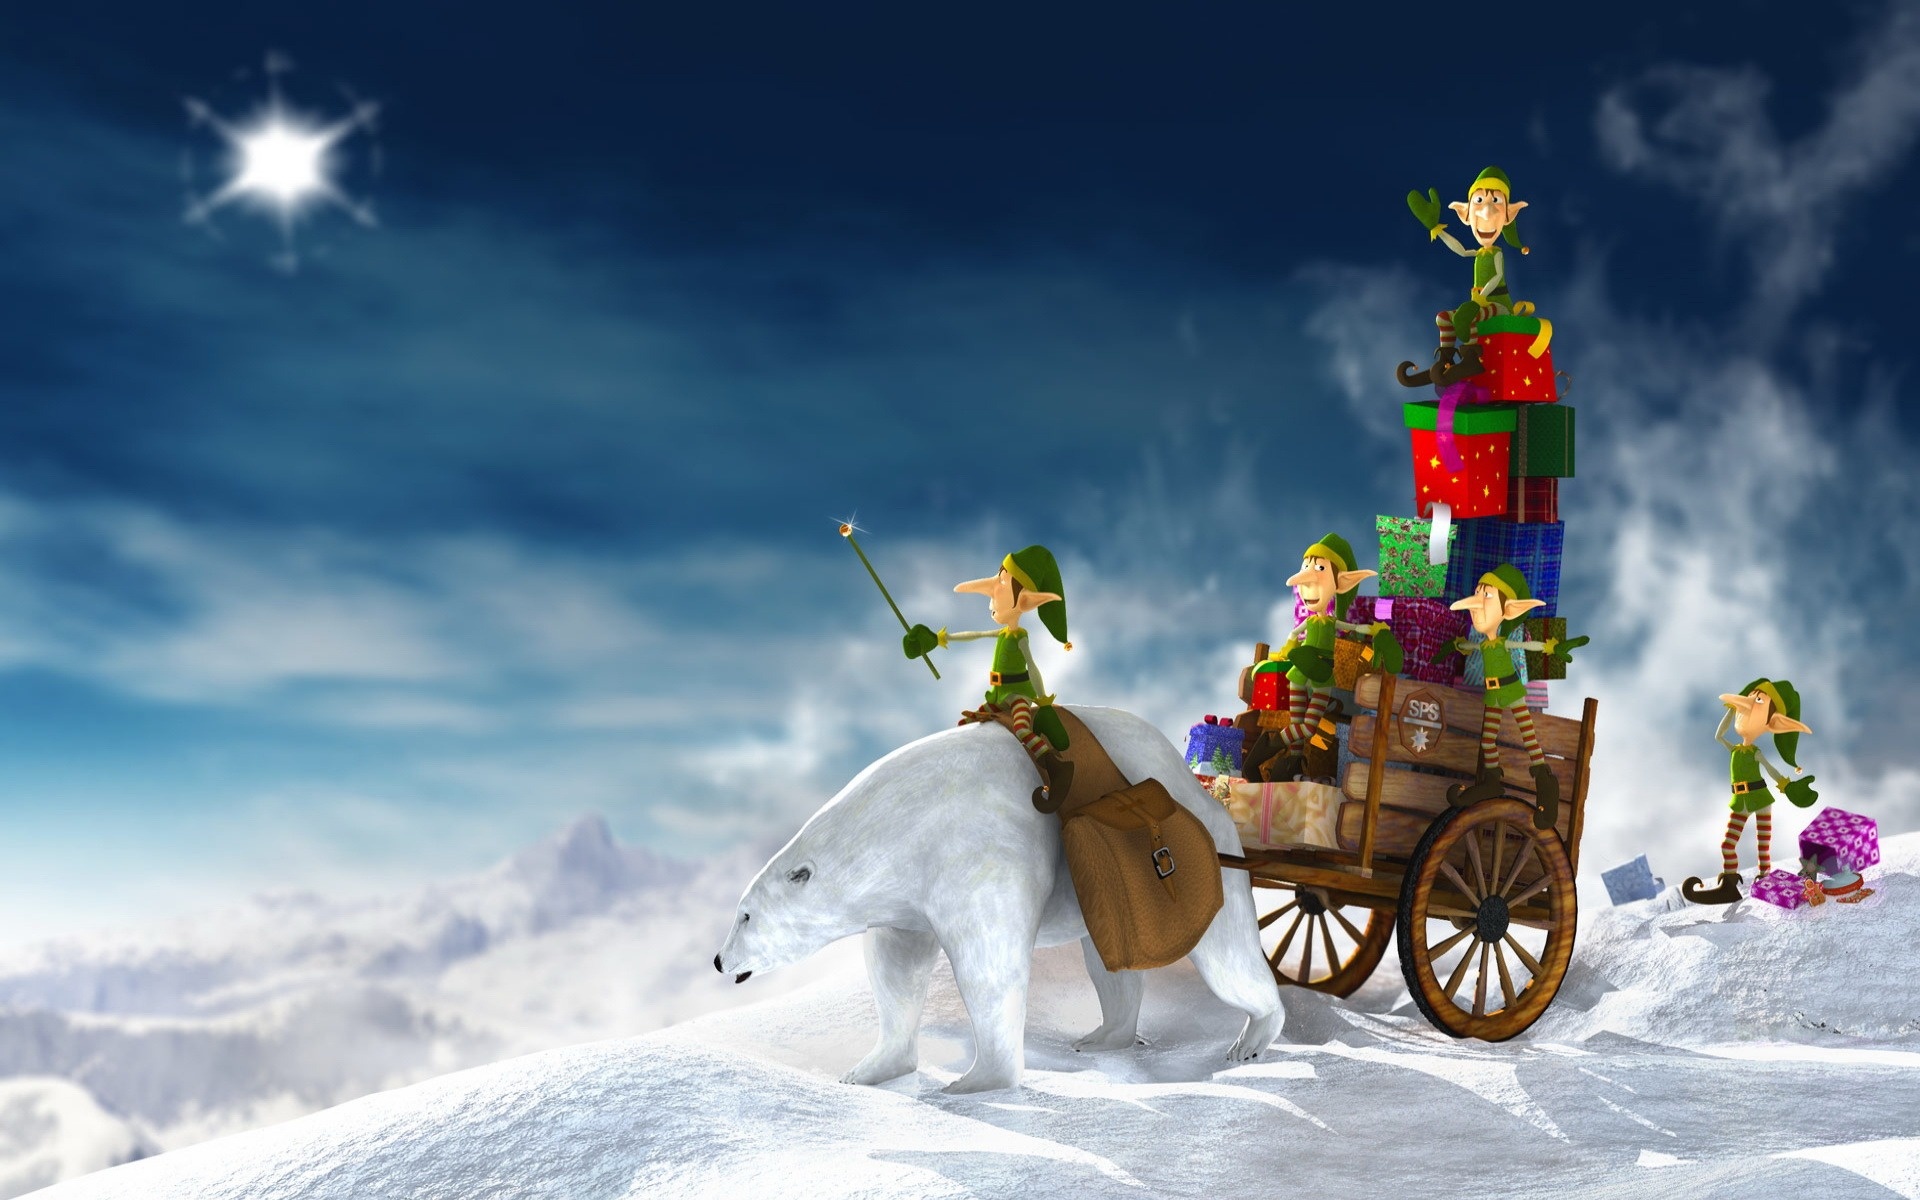 4K Christmas wallpaper, Festive season, Joyful celebrations, Holiday spirit, 1920x1200 HD Desktop